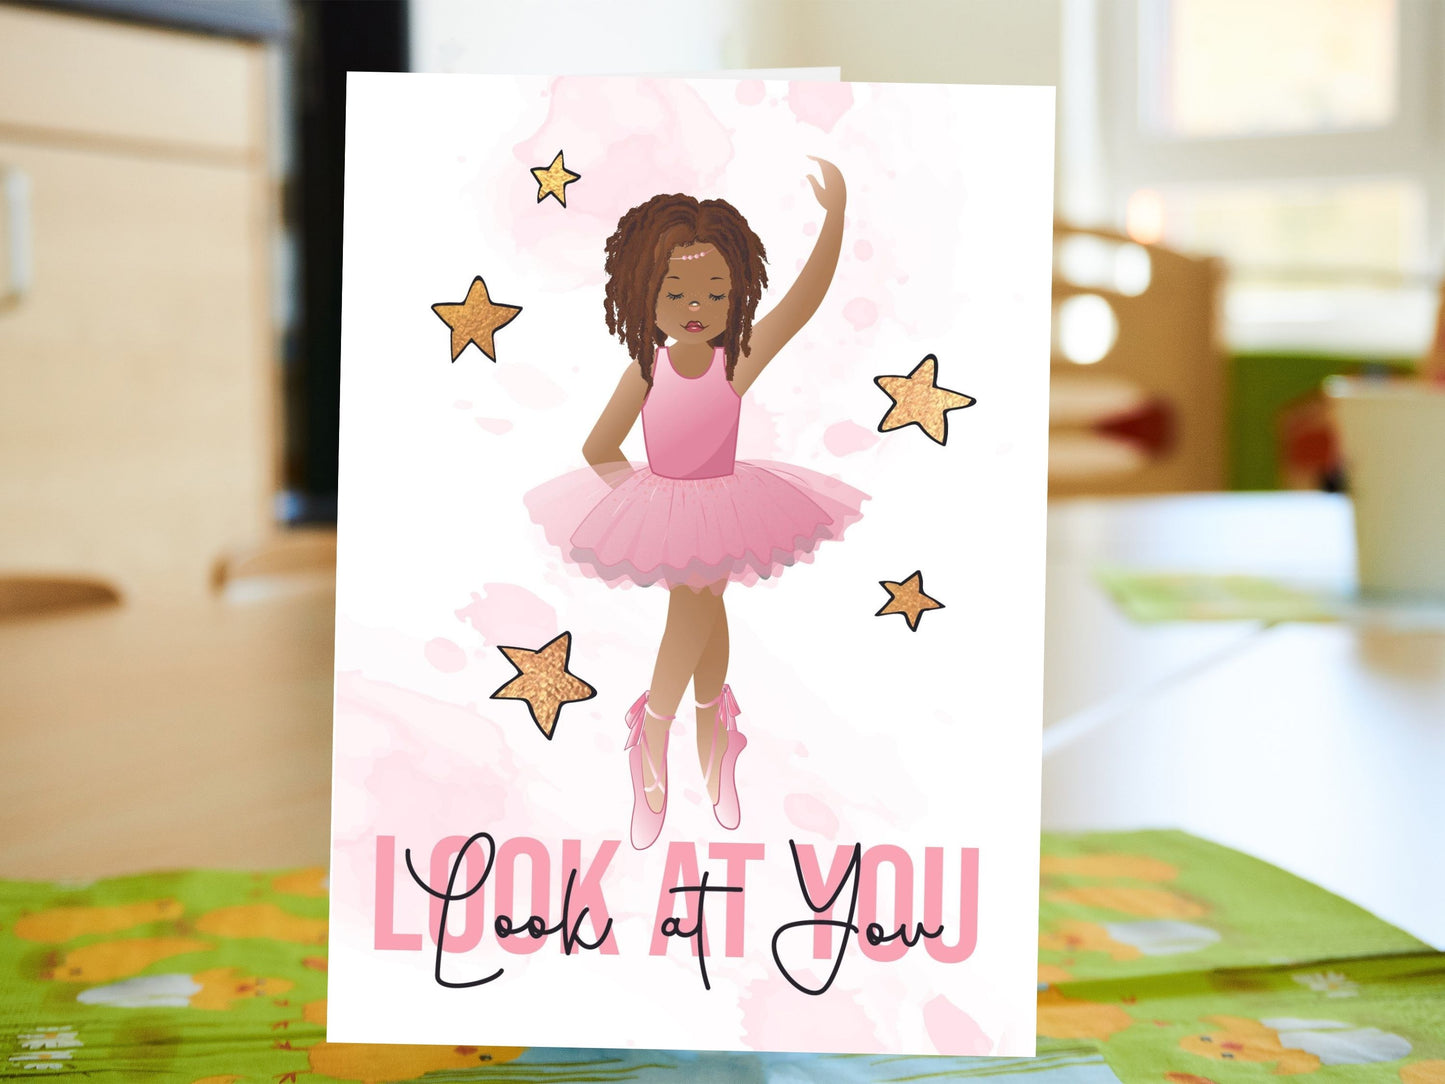 African American Birthday Card for Girl| Ballerina Birthday Card for Kids Party| Religious Birthday Card for Little Black Girl| Children’s Happy Birthday